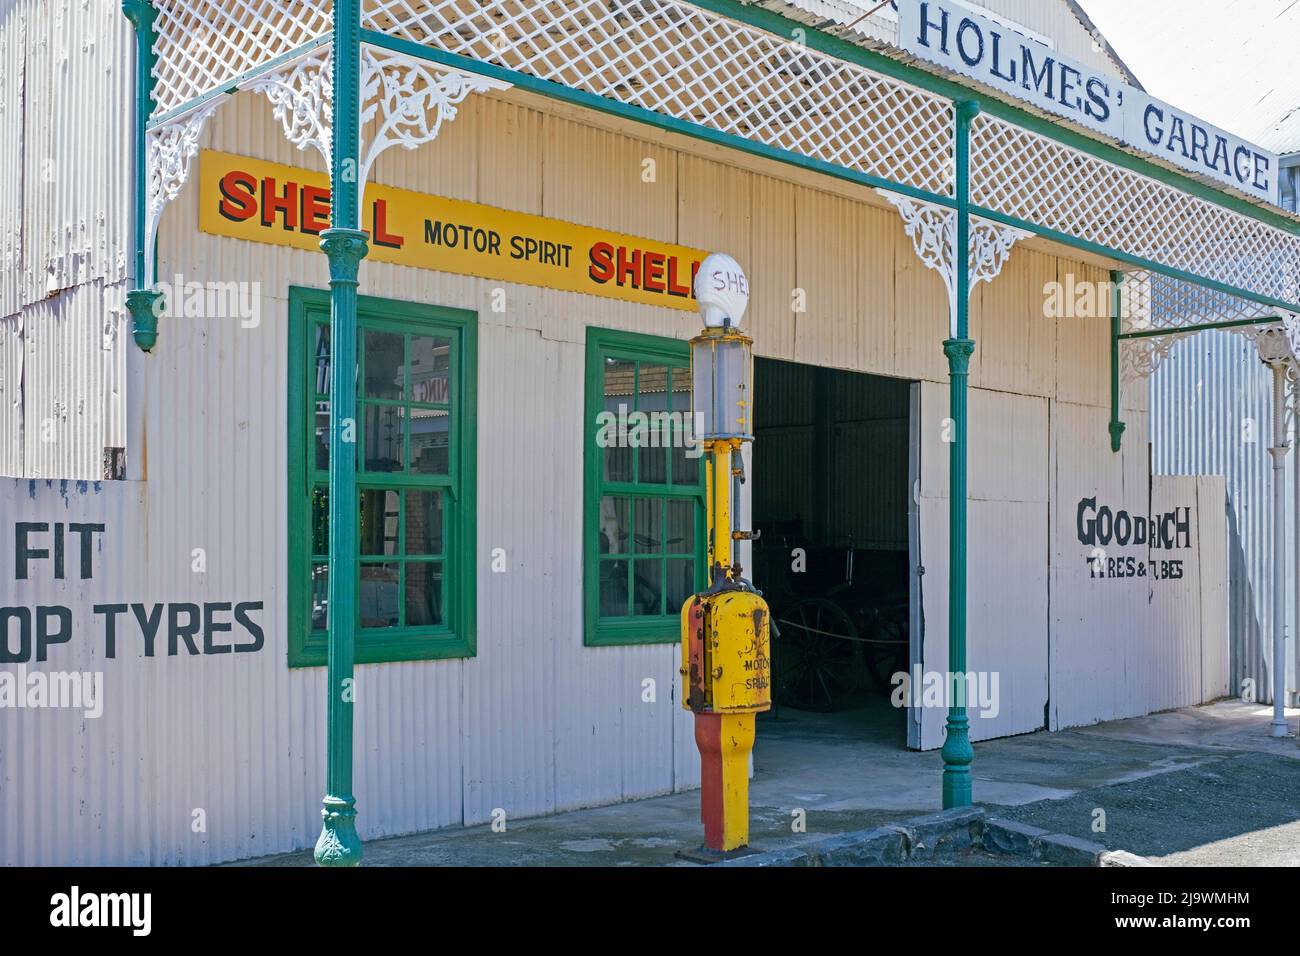 Alte Garage und Shell-Tankstelle am Big Hole and Open Mine Museum in Kimberley, Frances Baard, Provinz Nordkap, Südafrika Stockfoto